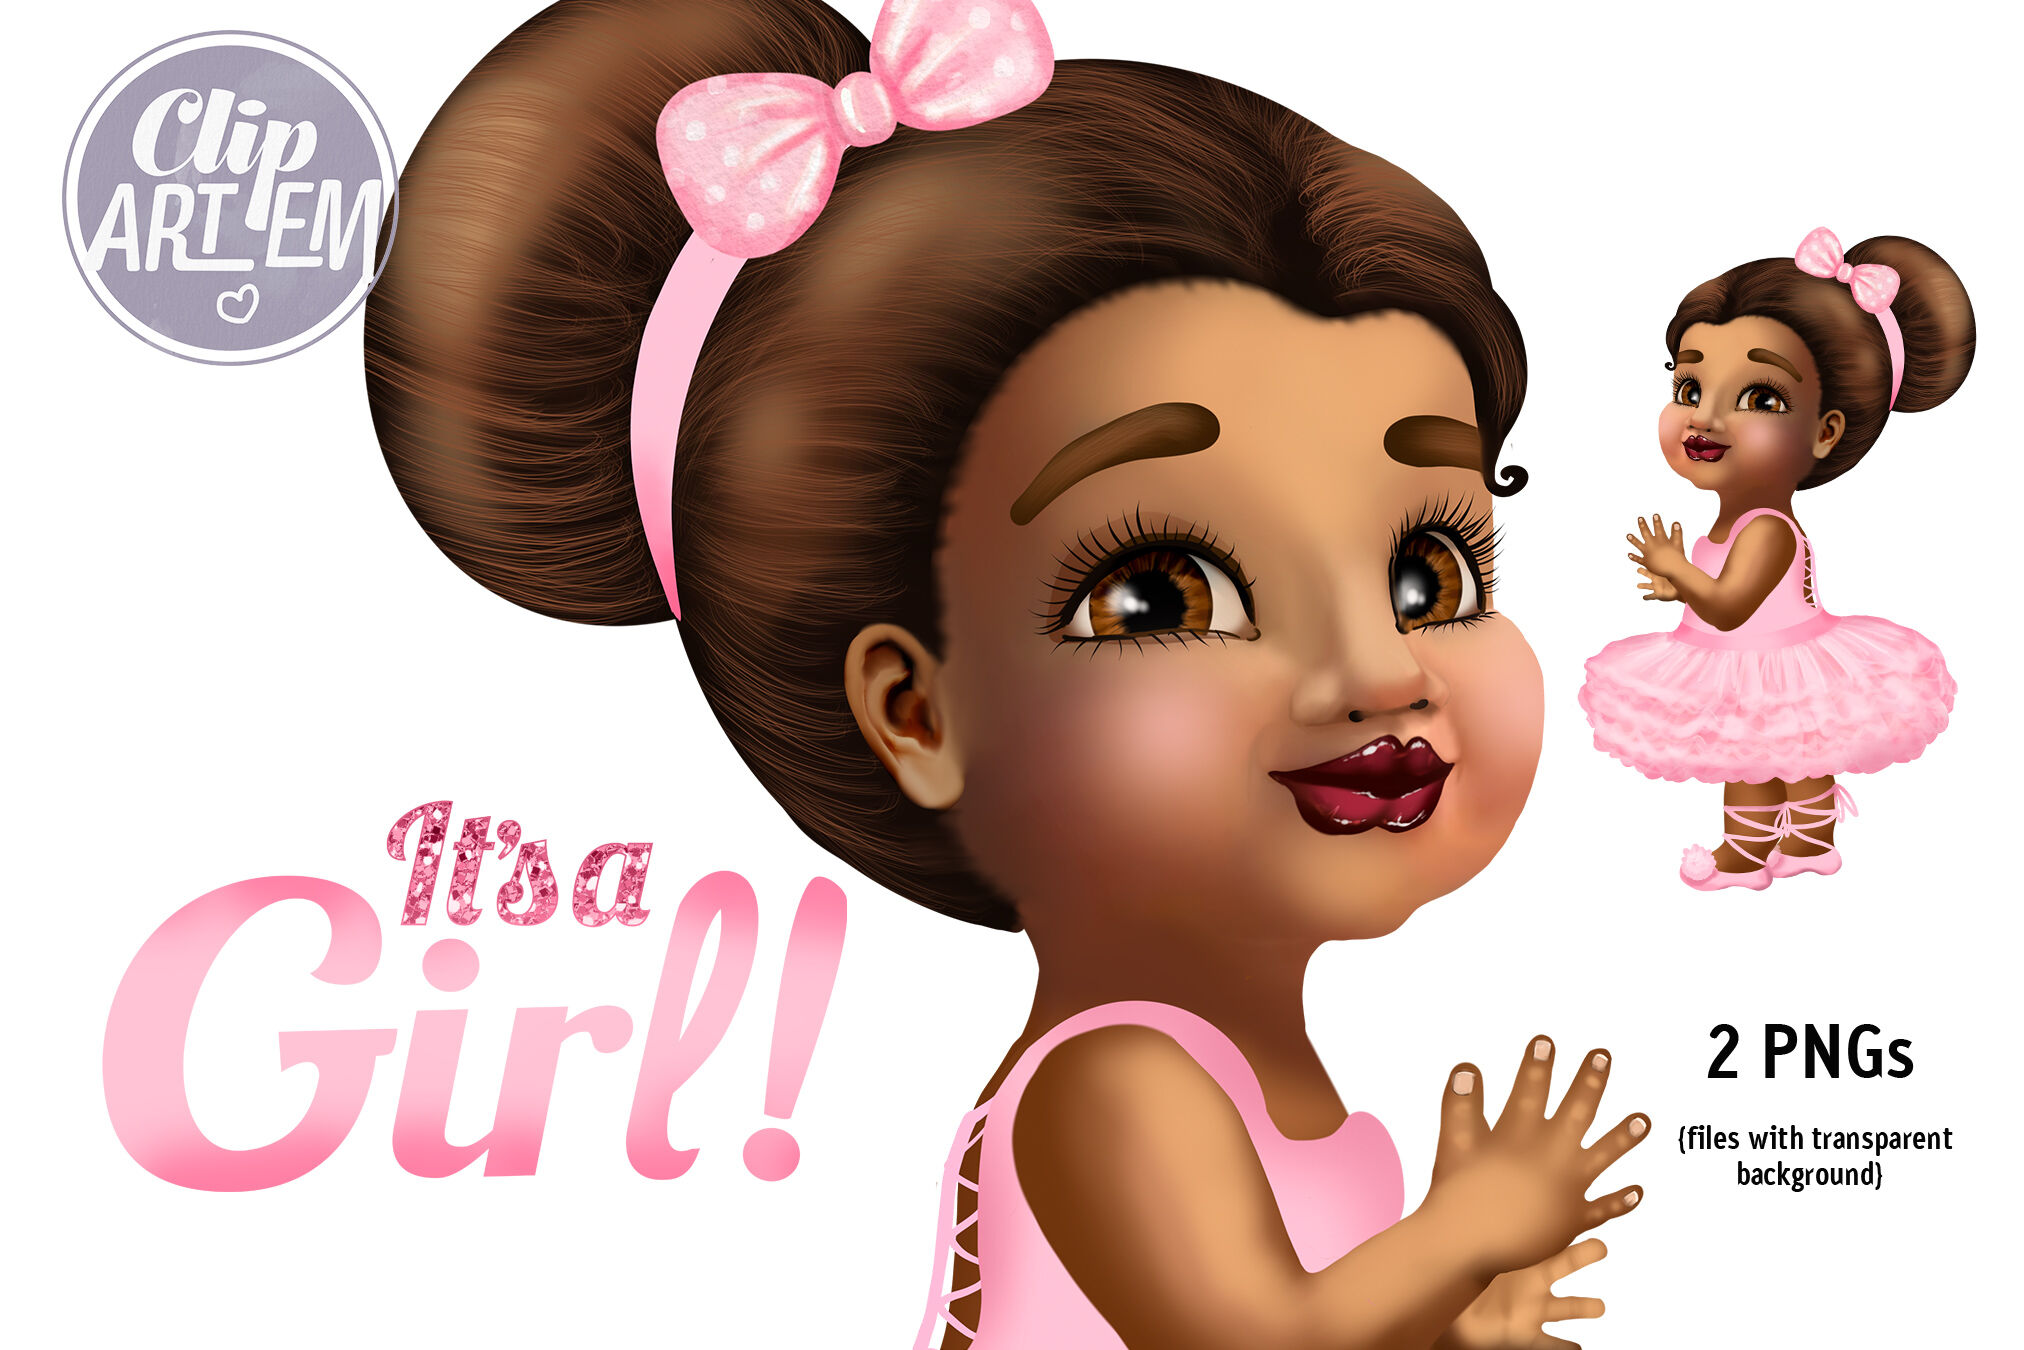 african american baby girl clip art